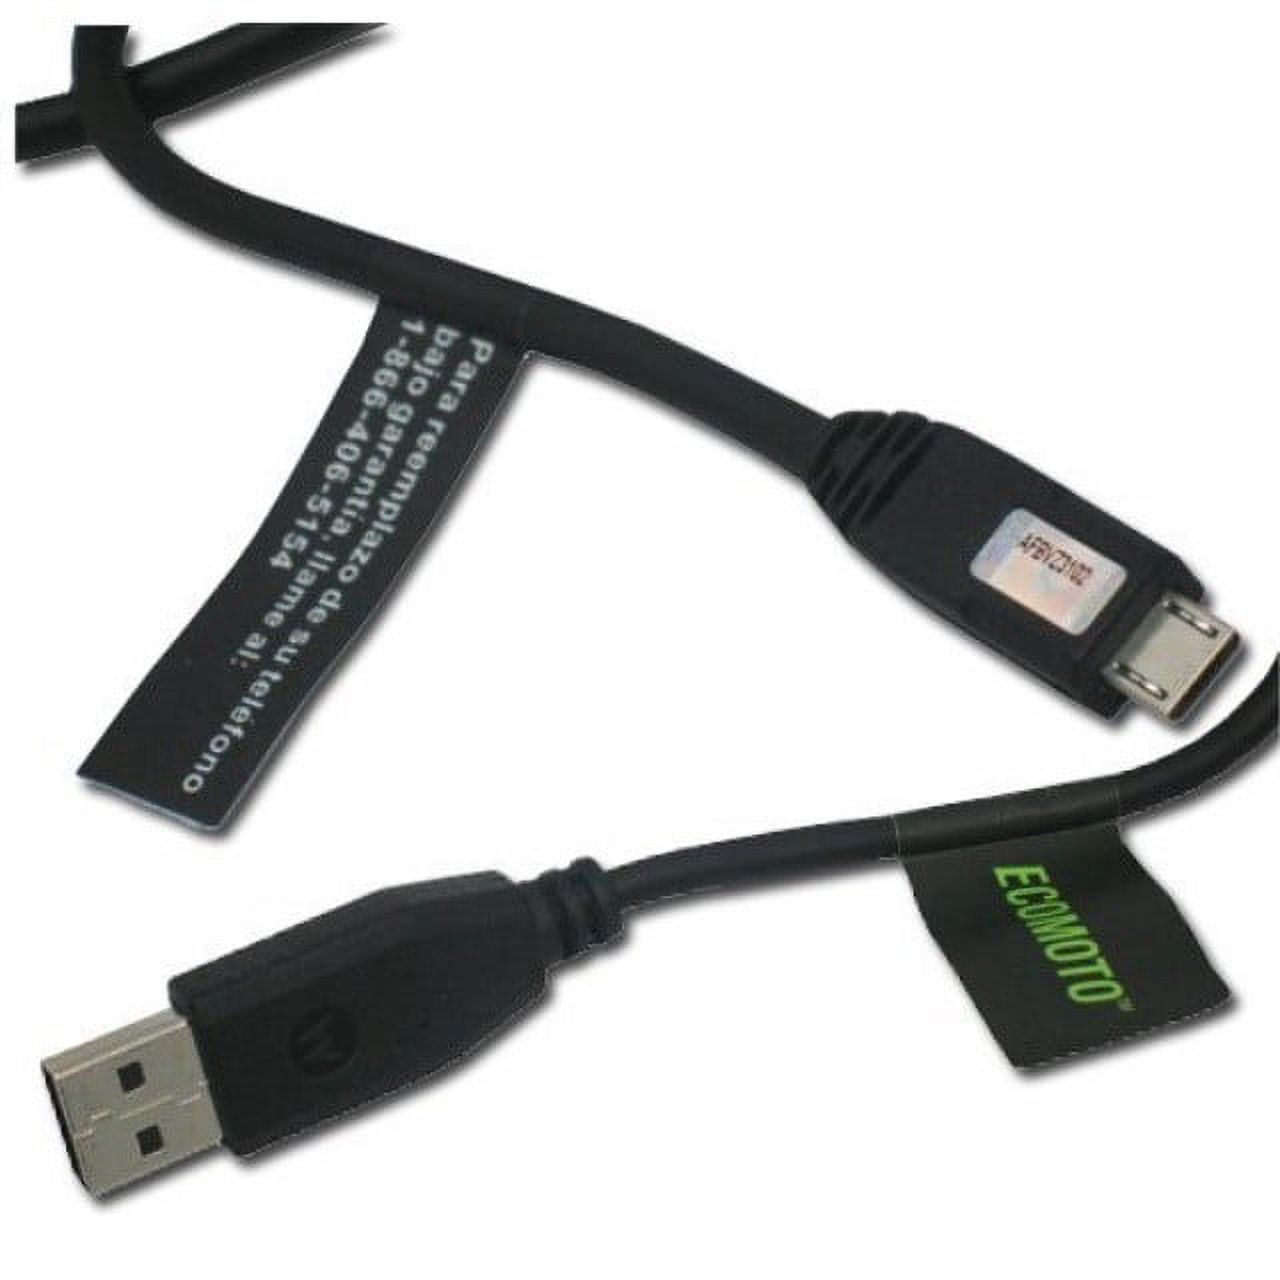 Motorola ECOMOTO USB Data Cable for Motorola DROID BIONIC, Motorola XOOM, Motorola CLIQ 2, CLIQ XT and Motorola DEFY - image 1 of 1